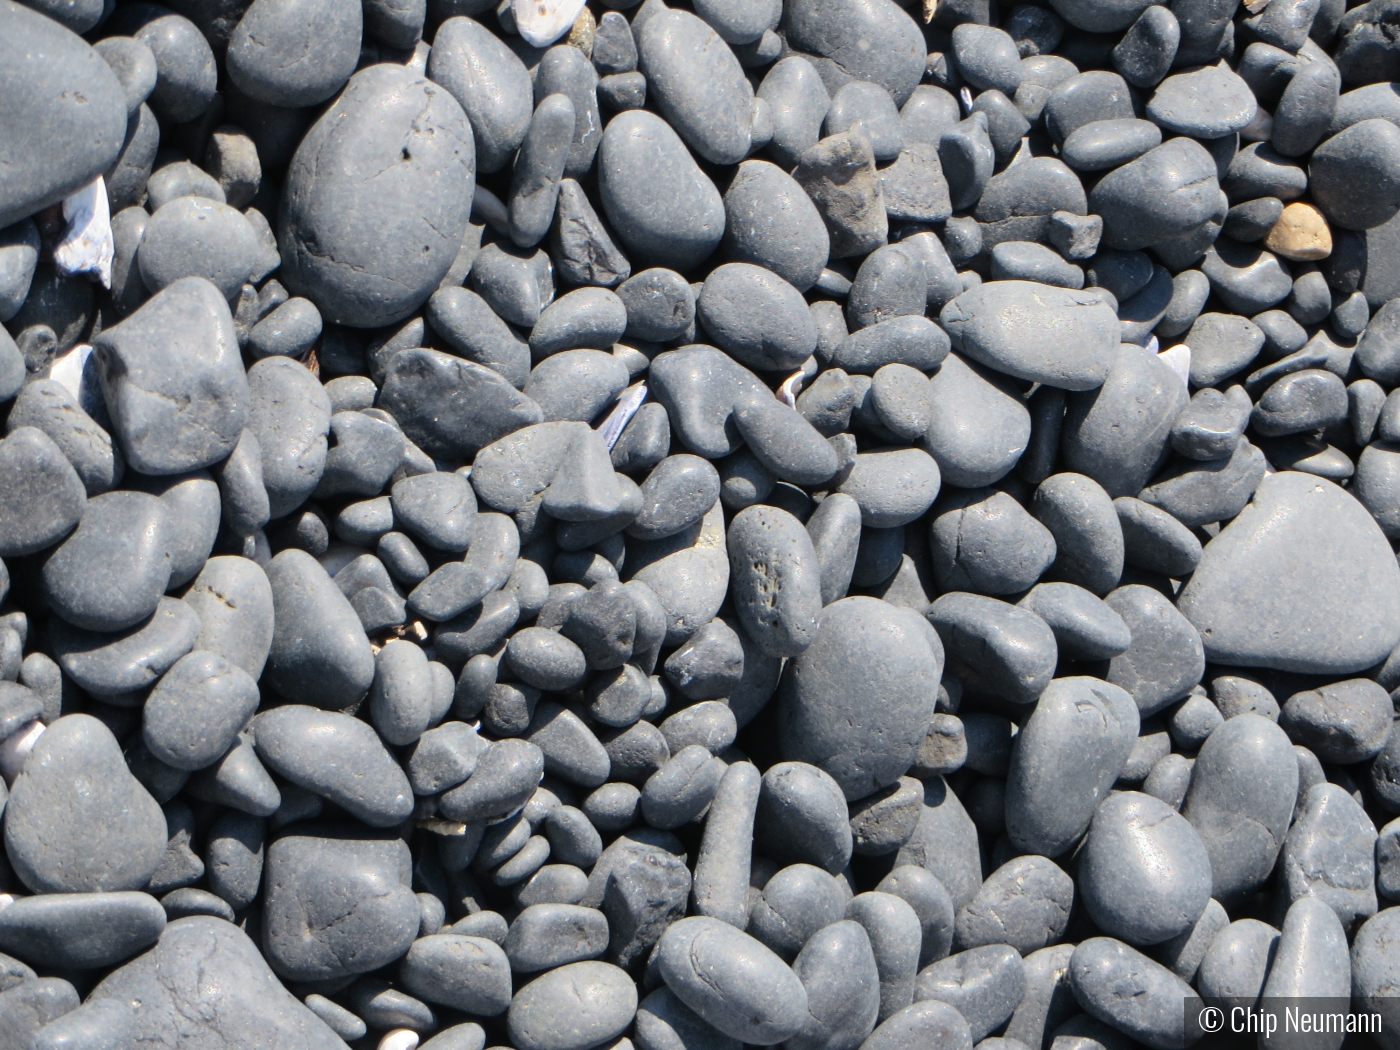 Beach of Pebbles by Chip Neumann